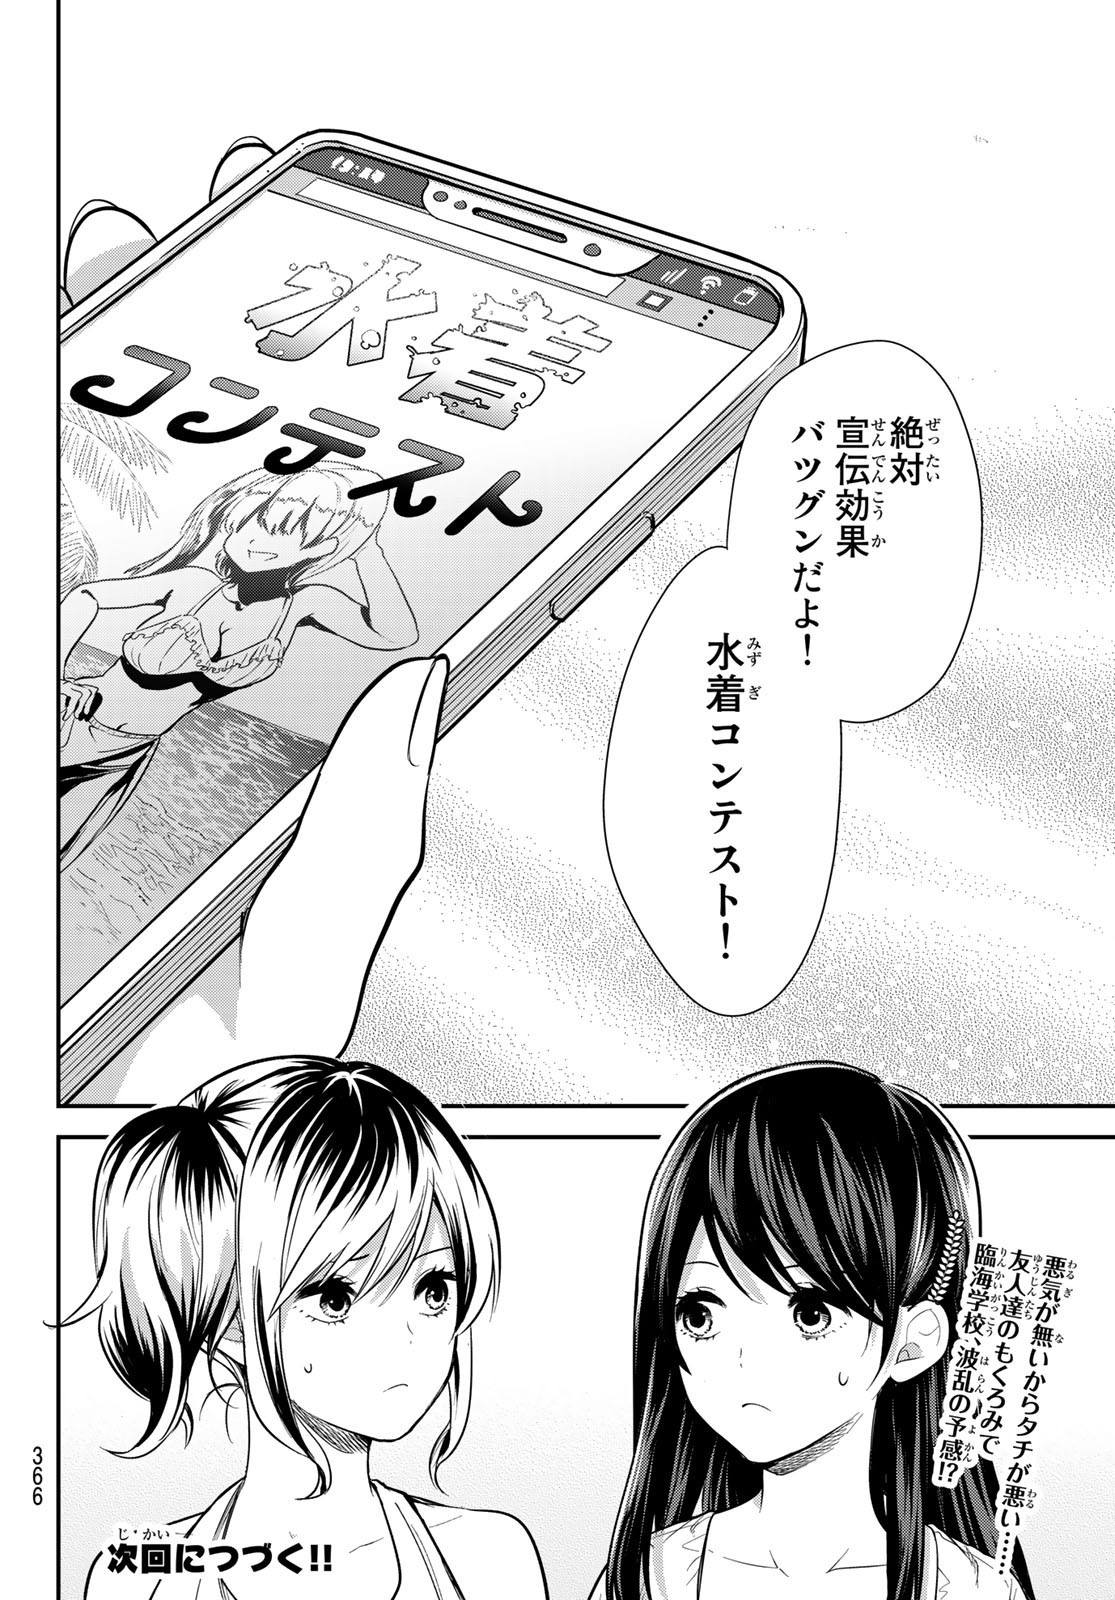 Kimi ga Megami Nara Ii no ni (I Wish You Were My Muse) - Chapter 021 - Page 20